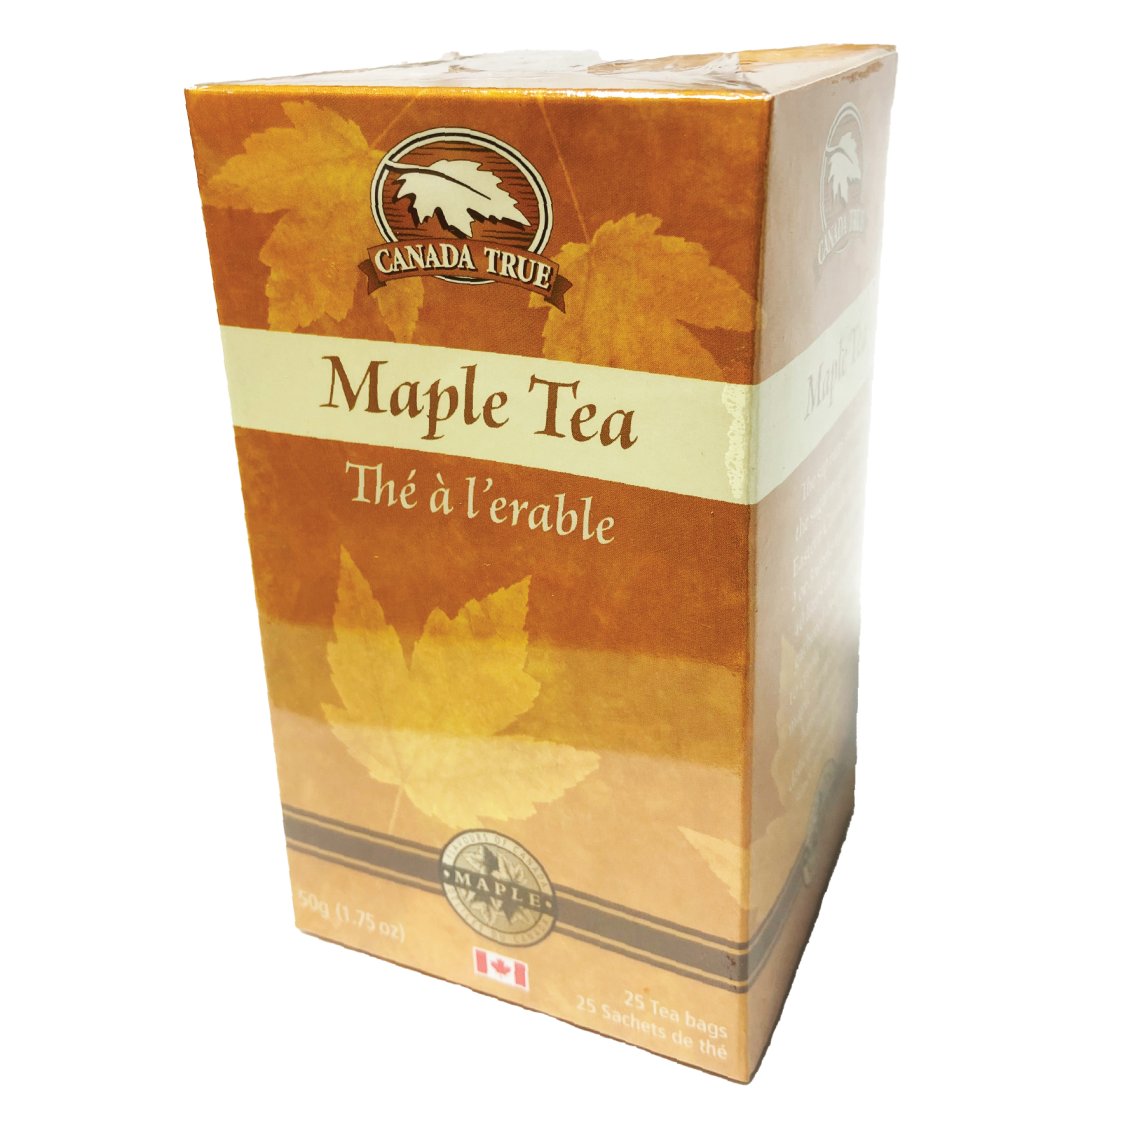 Canada True Maple Tea front view